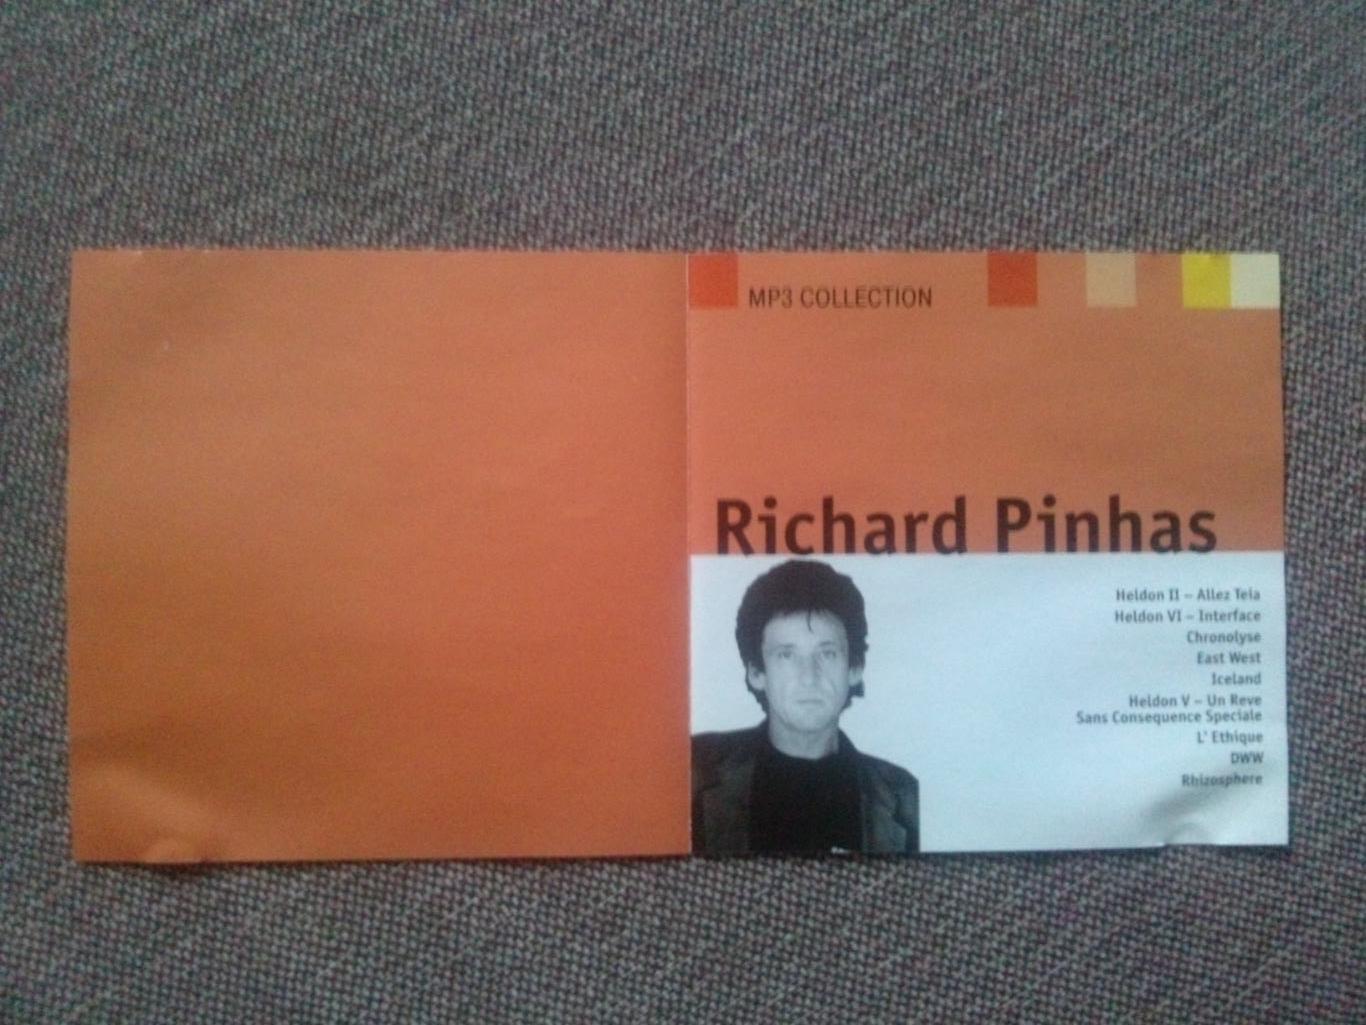 MP - 3 CD диск : Richard Pinhas (Ричард Пинхас) 1975 - 1992 гг. (9 альбомов) Рок 2